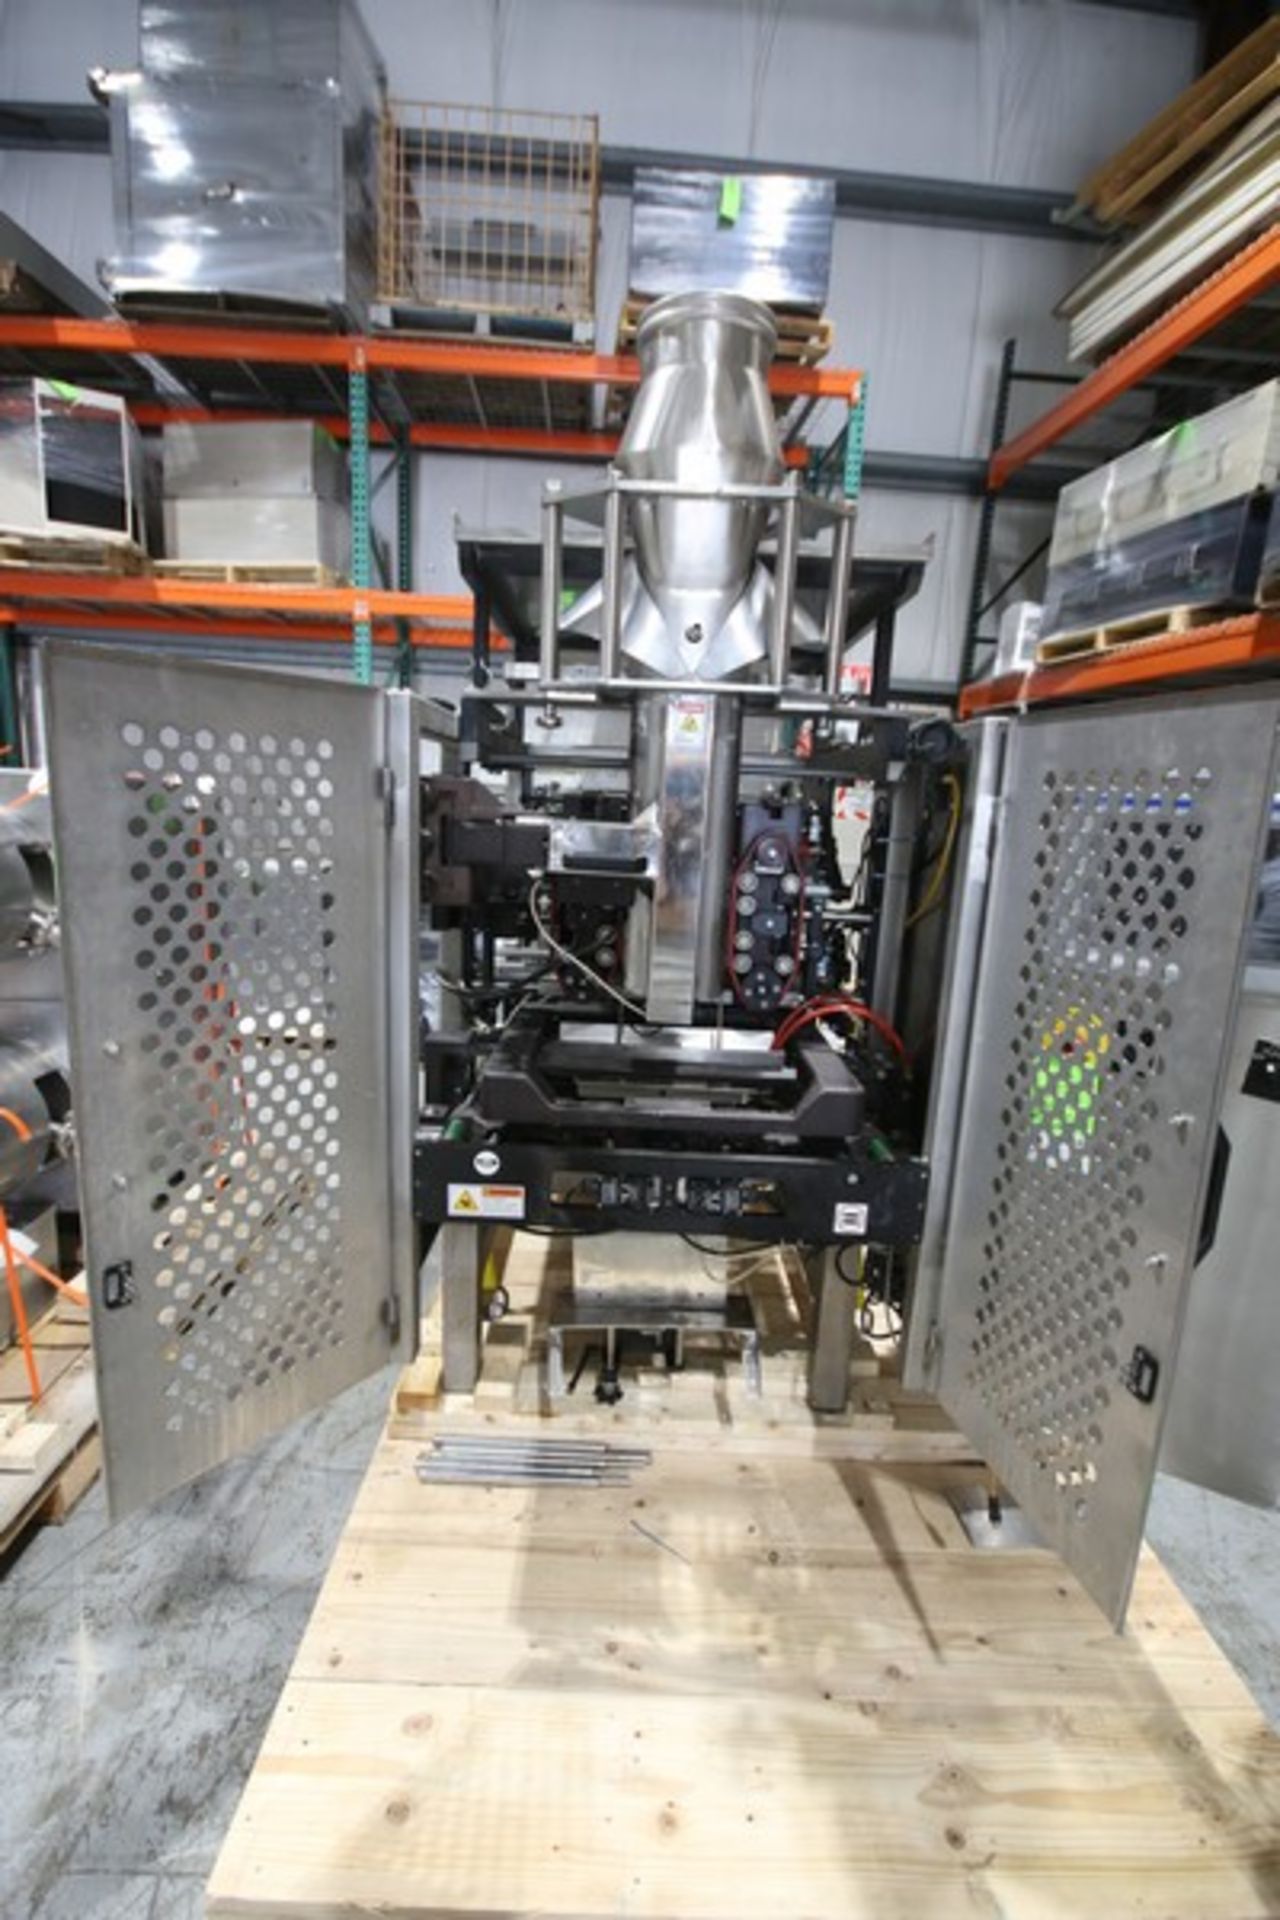 2014 Hayssen Sandiacre Vertical Form Fill & Seal Machine (VFFS), Model ULTIMA 120-19 -HR, SN X83939, - Image 2 of 17